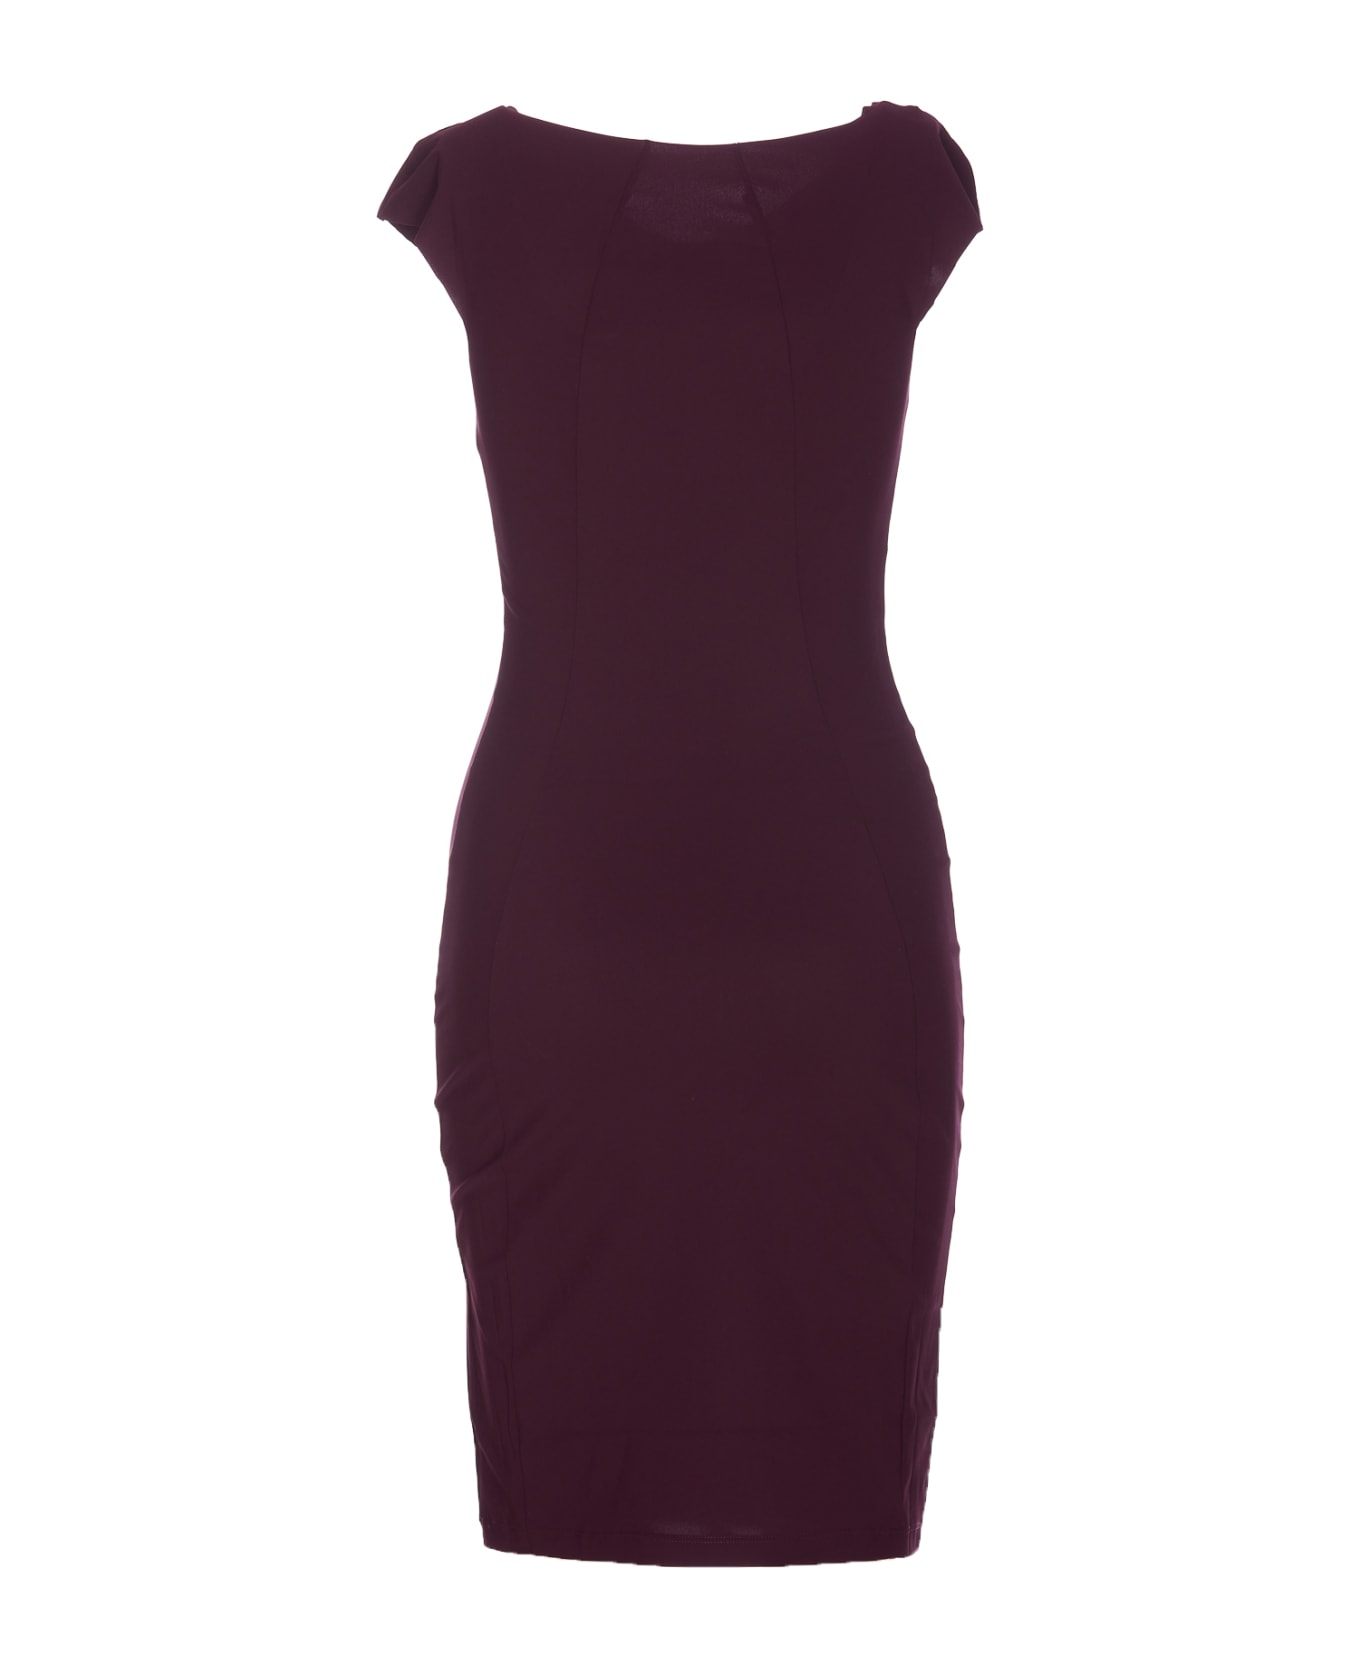 Patrizia Pepe Mini Dress - Purple